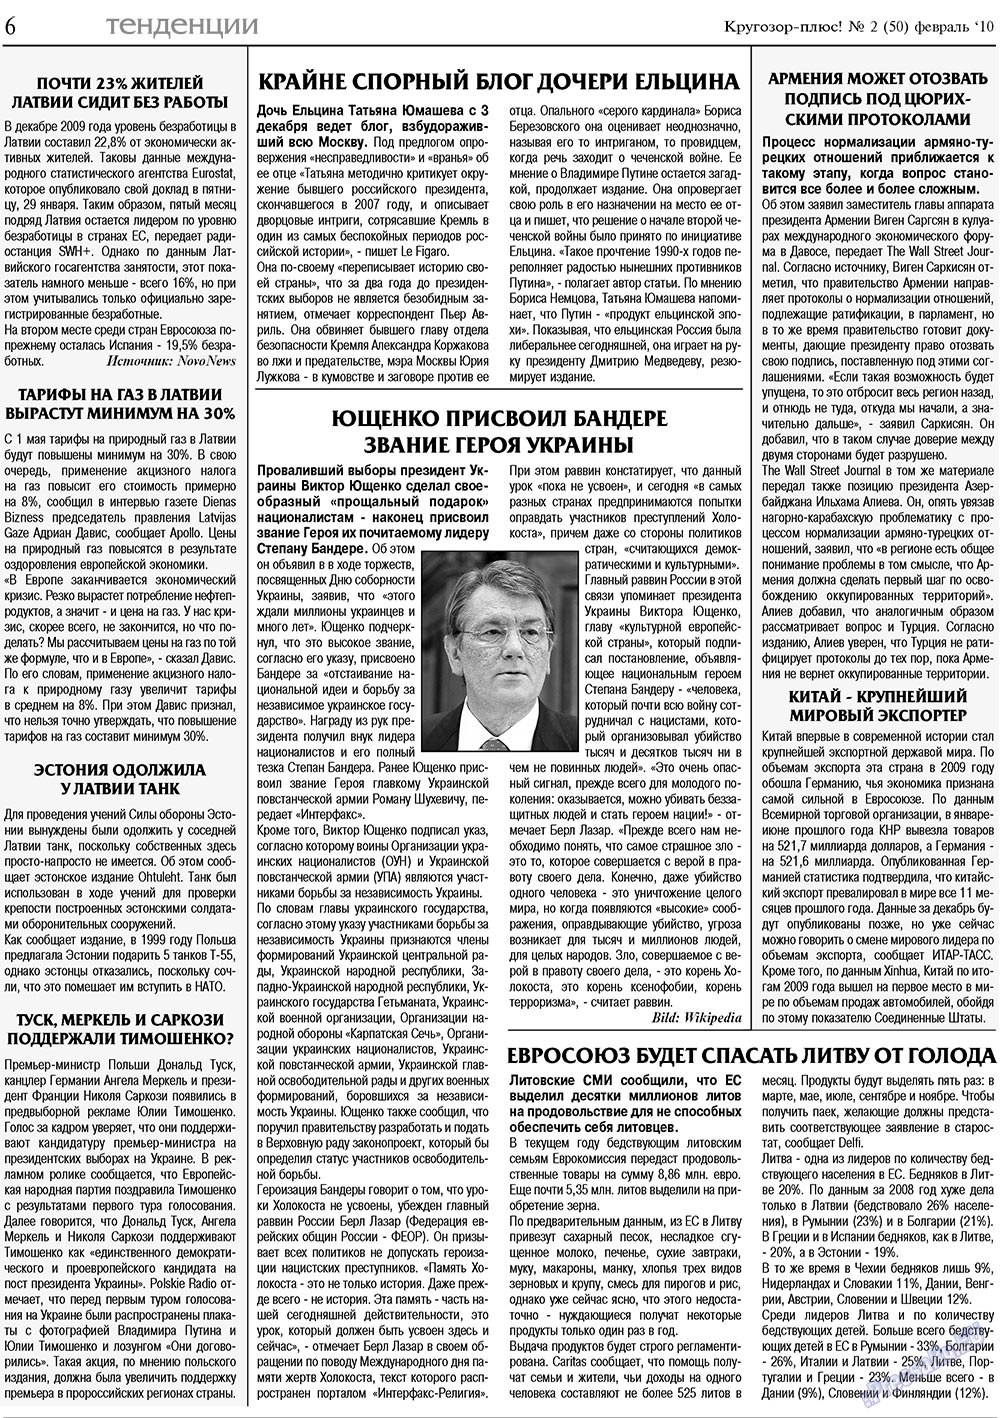 Кругозор плюс! (газета). 2010 год, номер 2, стр. 6